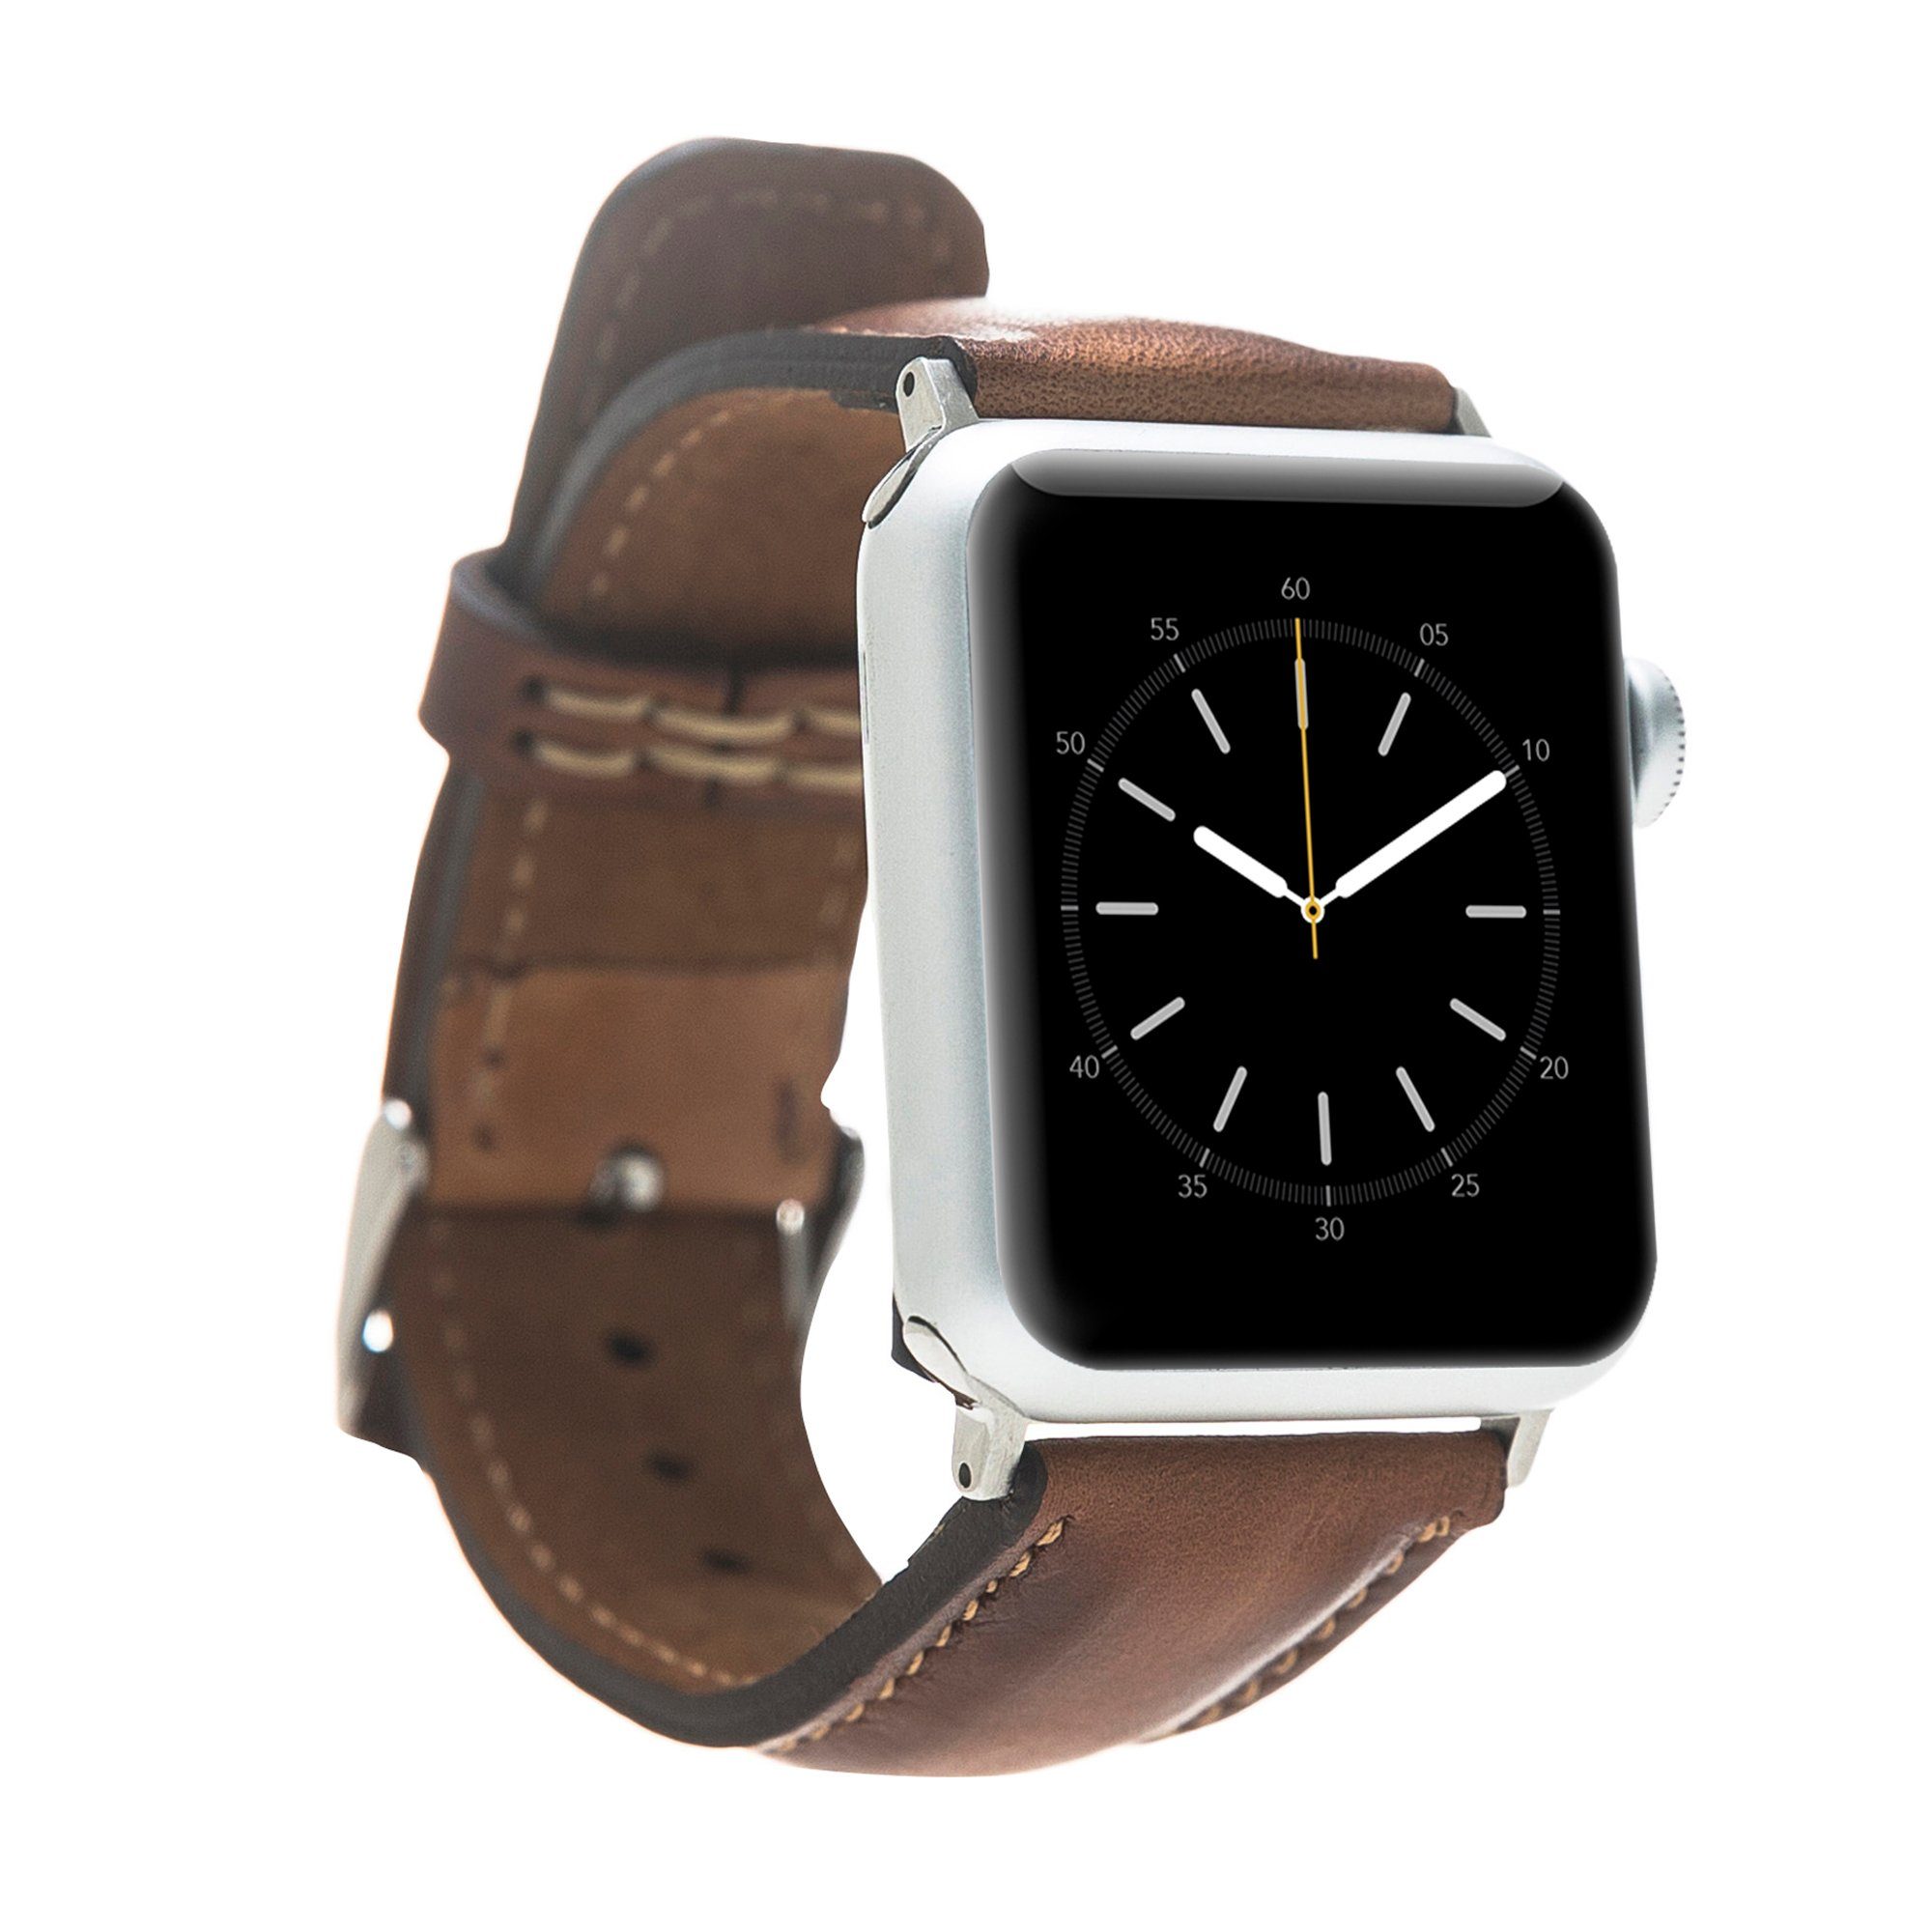 Renna Leather Uhrenarmband Watch Band Echtleder Ultra/9/8/7SE/6-1 Apple für Series Ersatzarmband